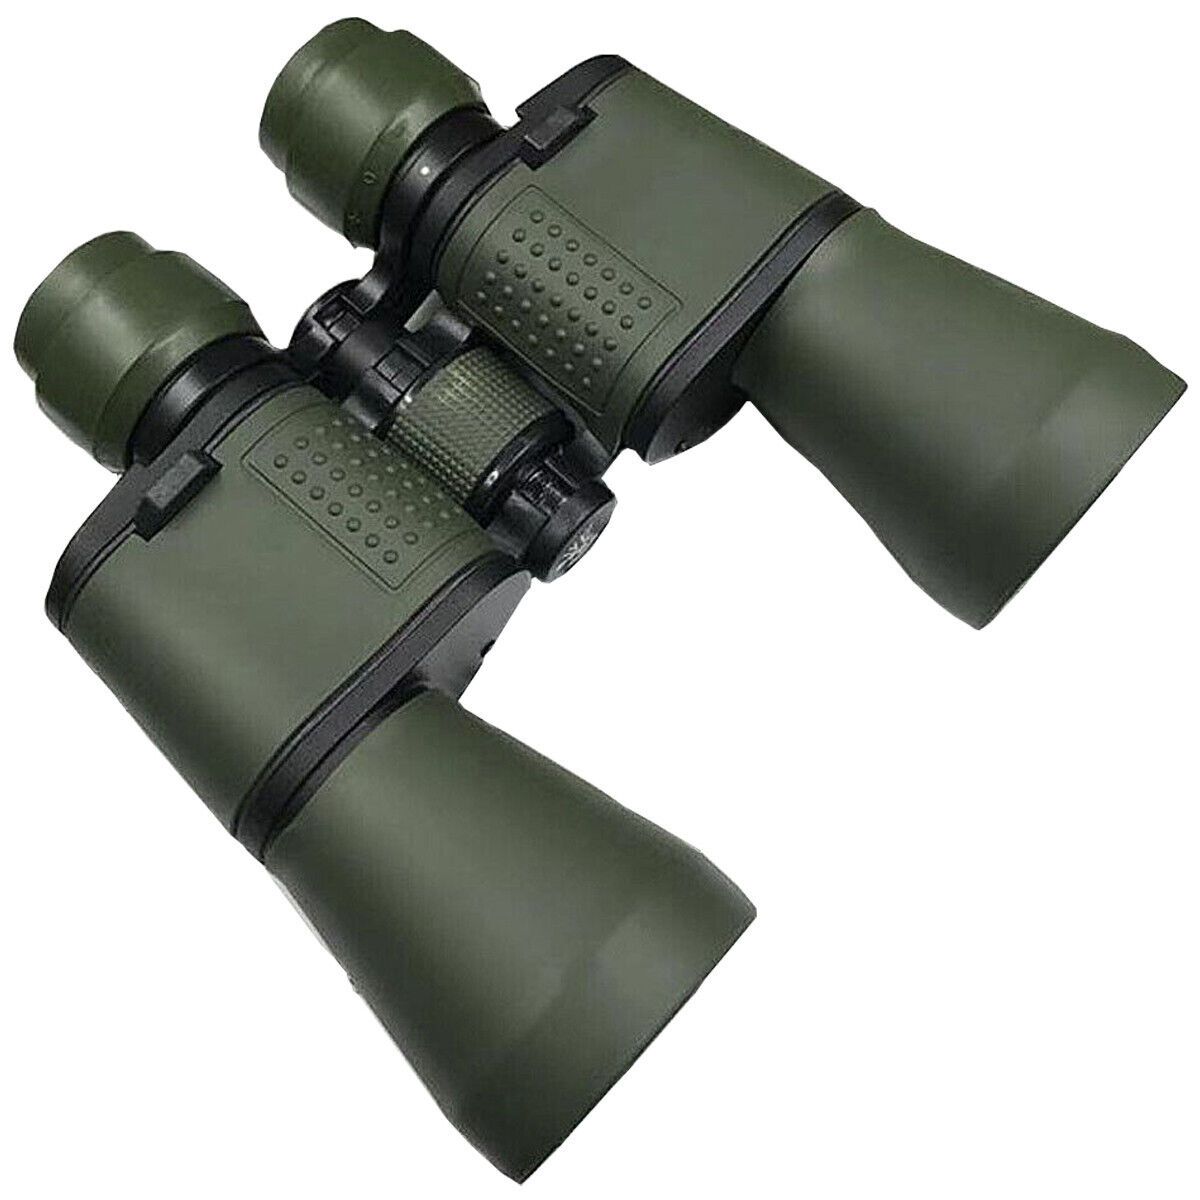 Brand New 20x50 Binoculars Army Green Outdoors Travel Bird Watching HD Shimmer